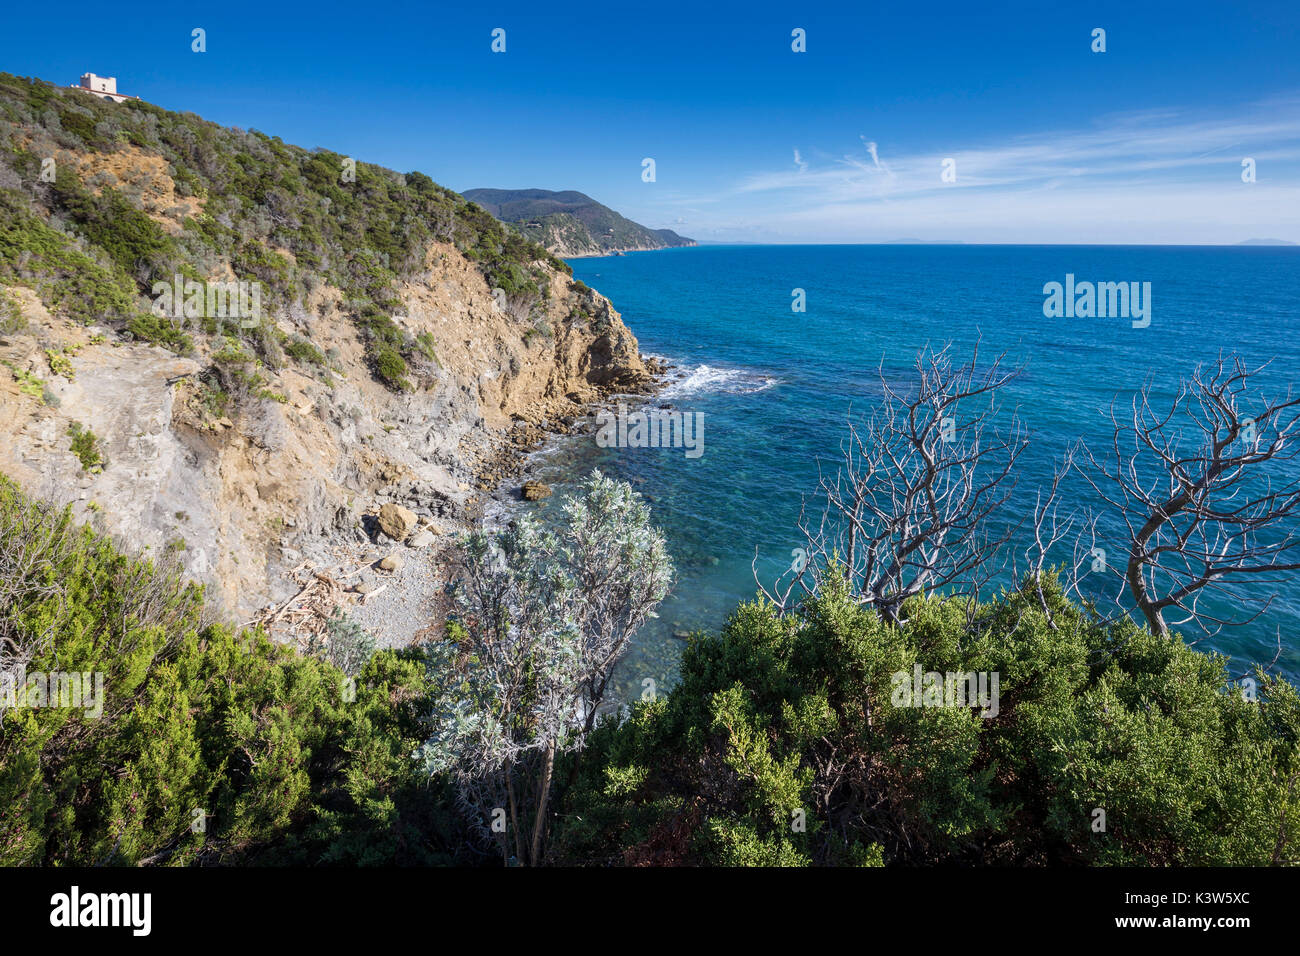 View of the rocky coast of Punta Ala. Punta Ala,Castiglione della Pescaia, Maremma, Grosseto province, Tuscany, Italy, Europe Stock Photo